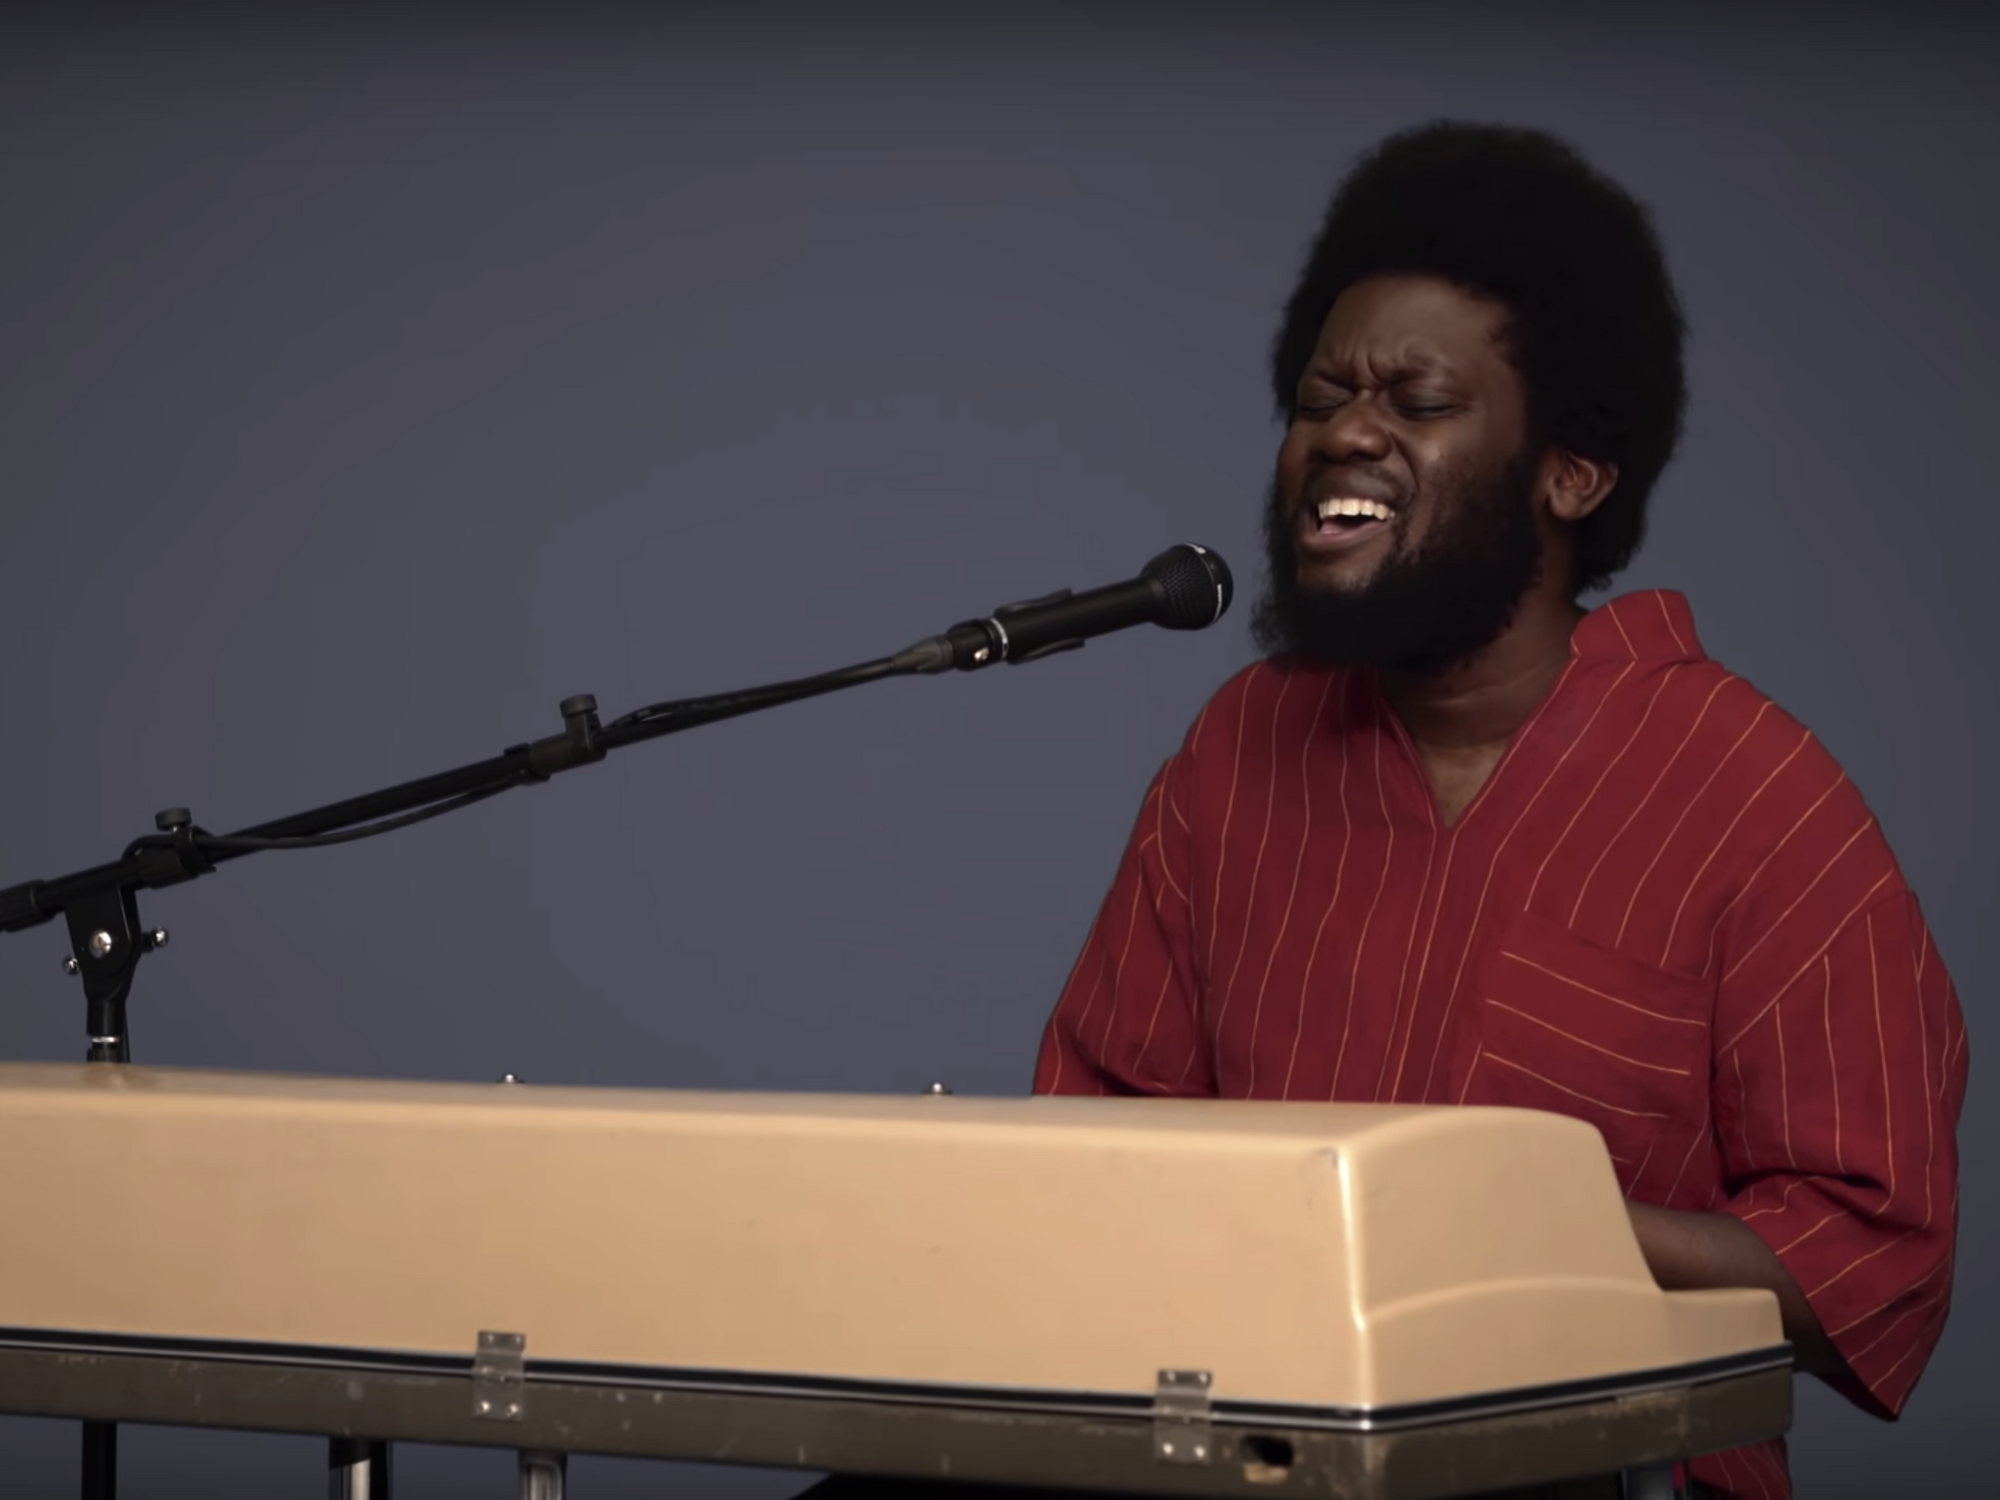 Michael Kiwanuka playing a keyboard and singing into a microphone 